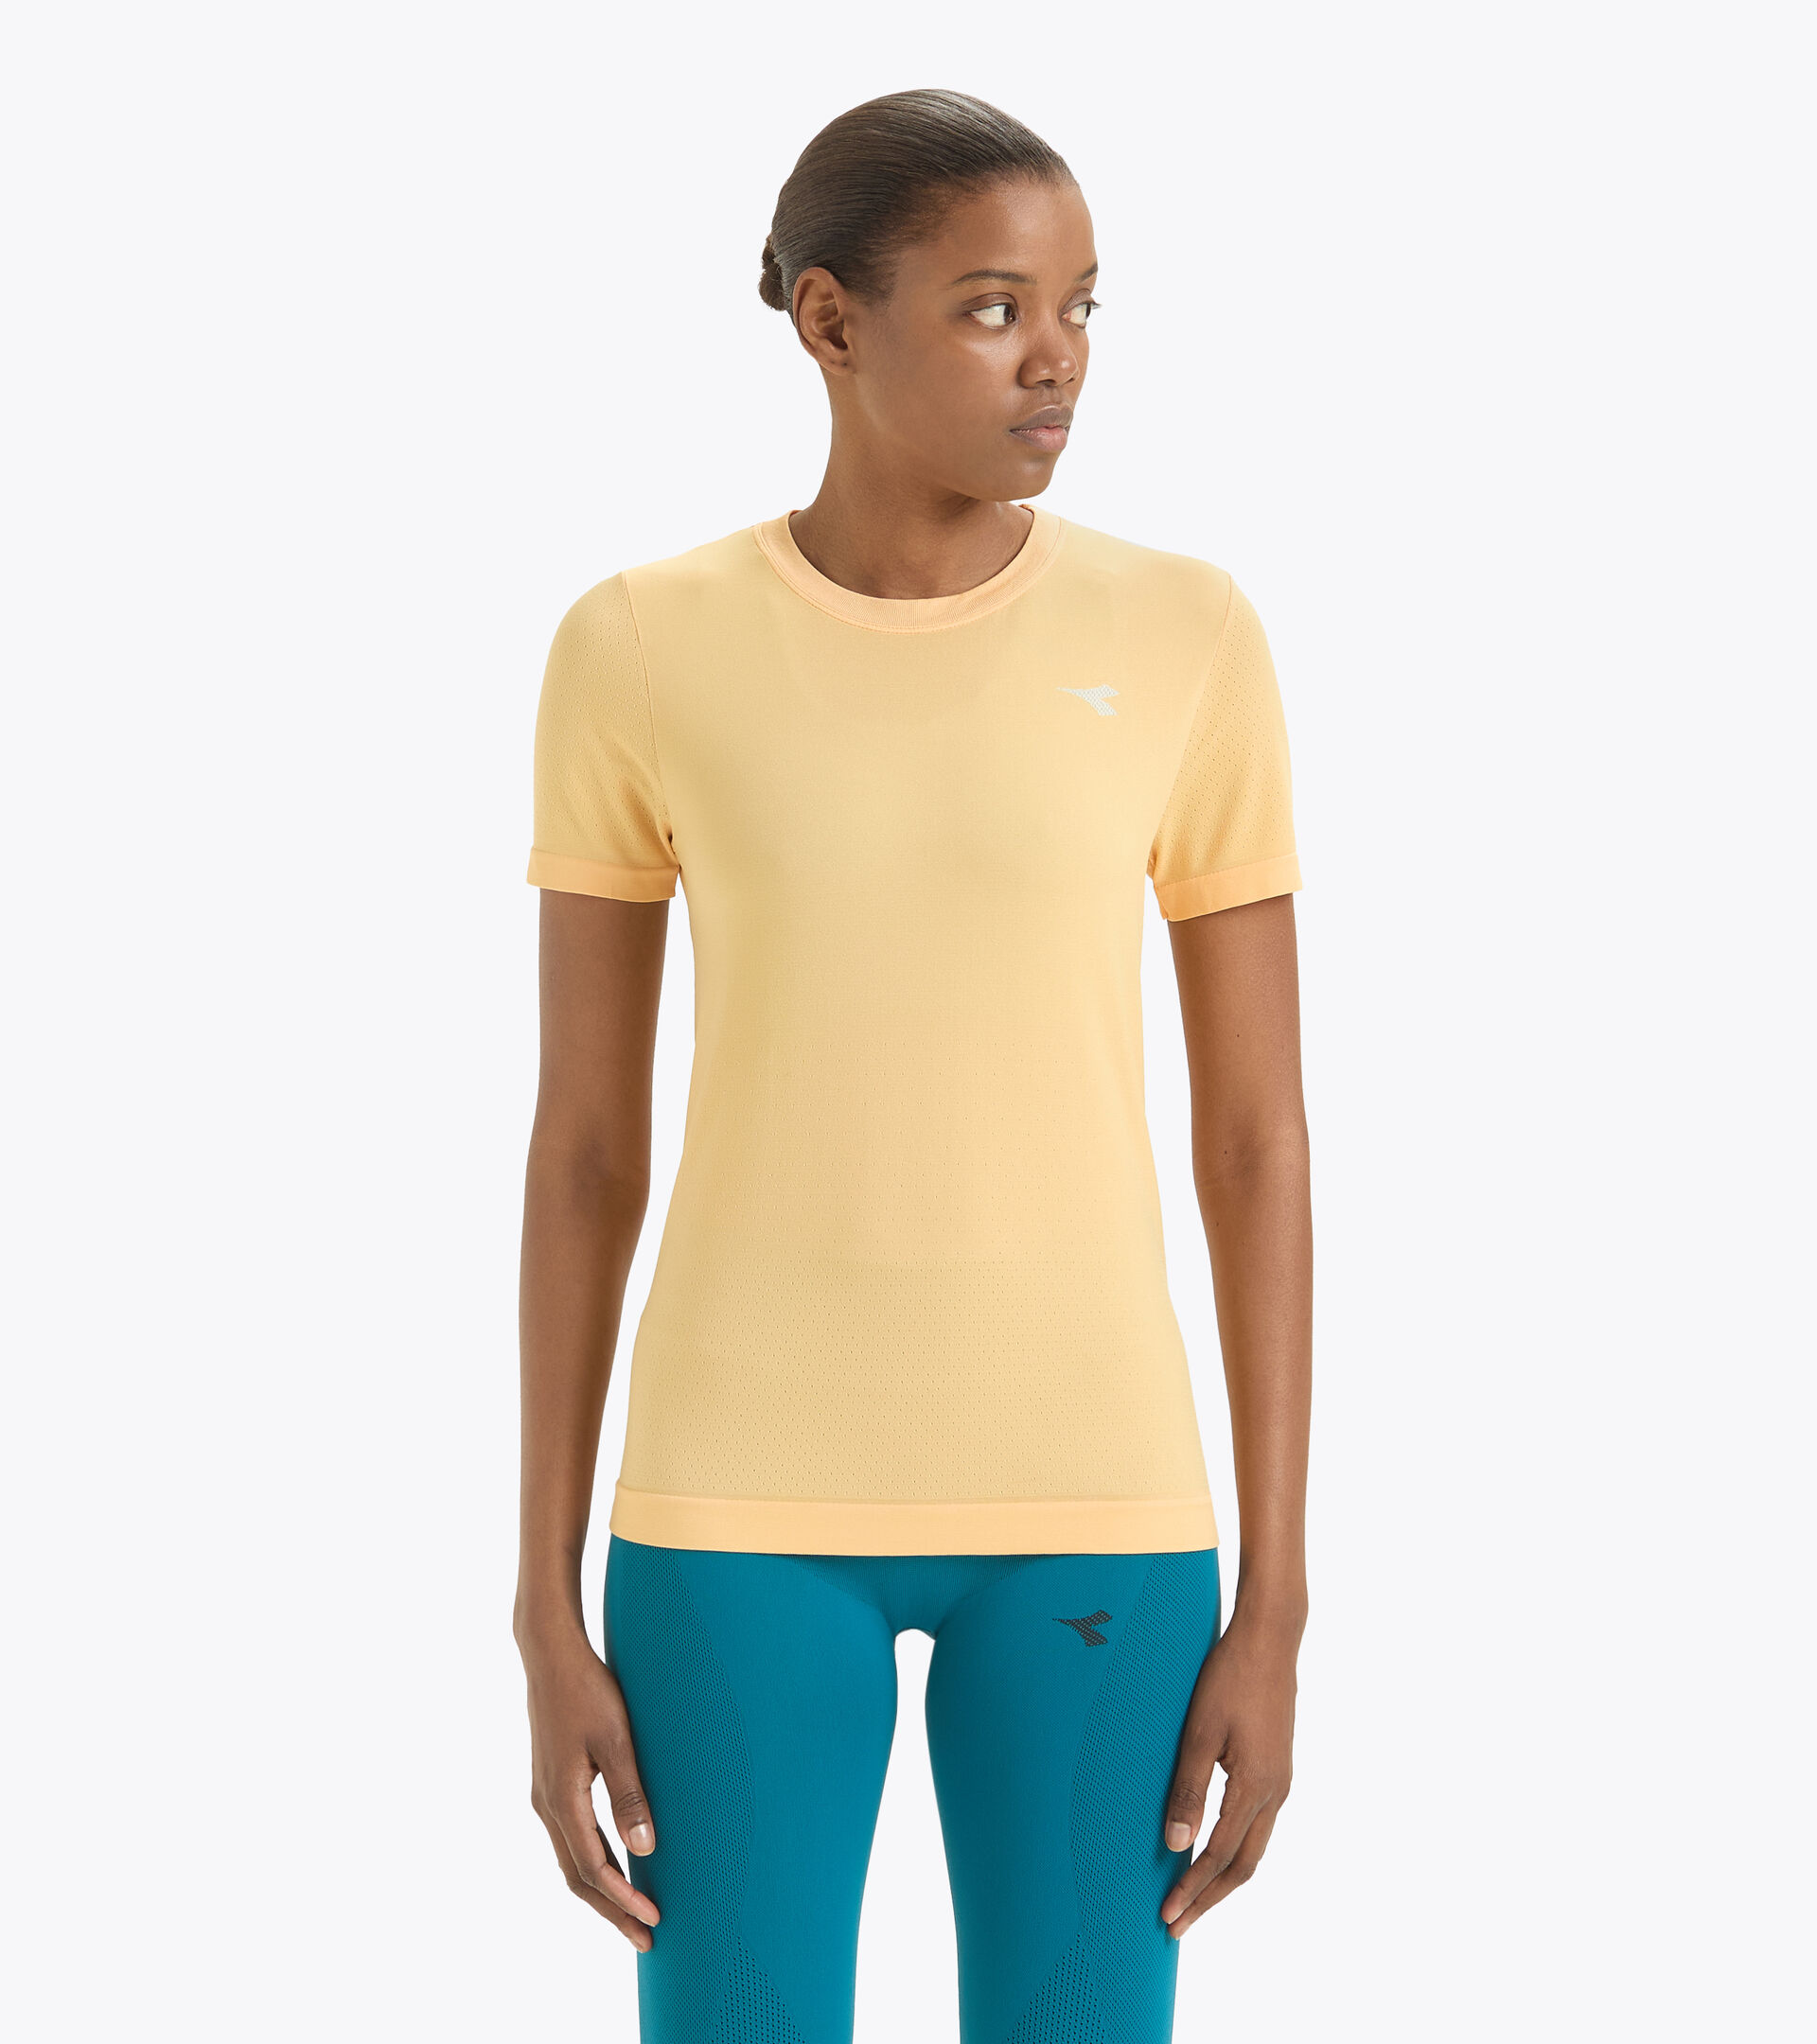 T-shirt de running sans coutures - Made in Italy - Femme L. SS T-SHIRT SKIN FRIENDLY JAUNE SOUCI CLAIR - Diadora